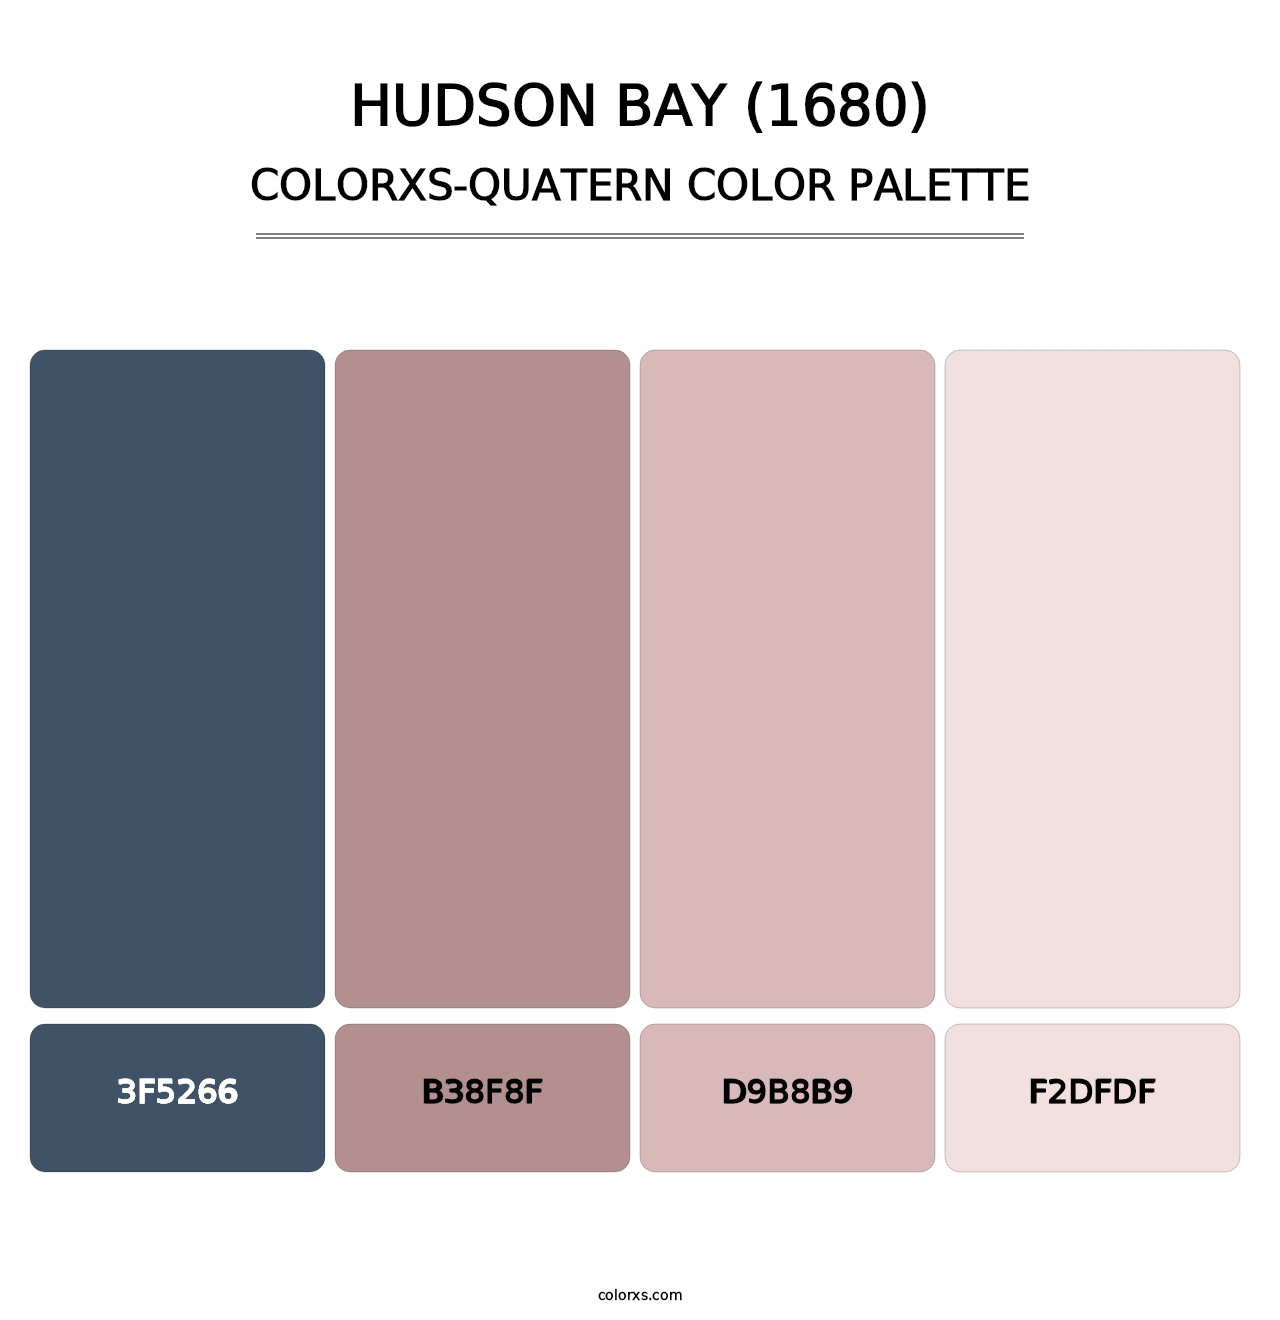 Hudson Bay (1680) - Colorxs Quatern Palette